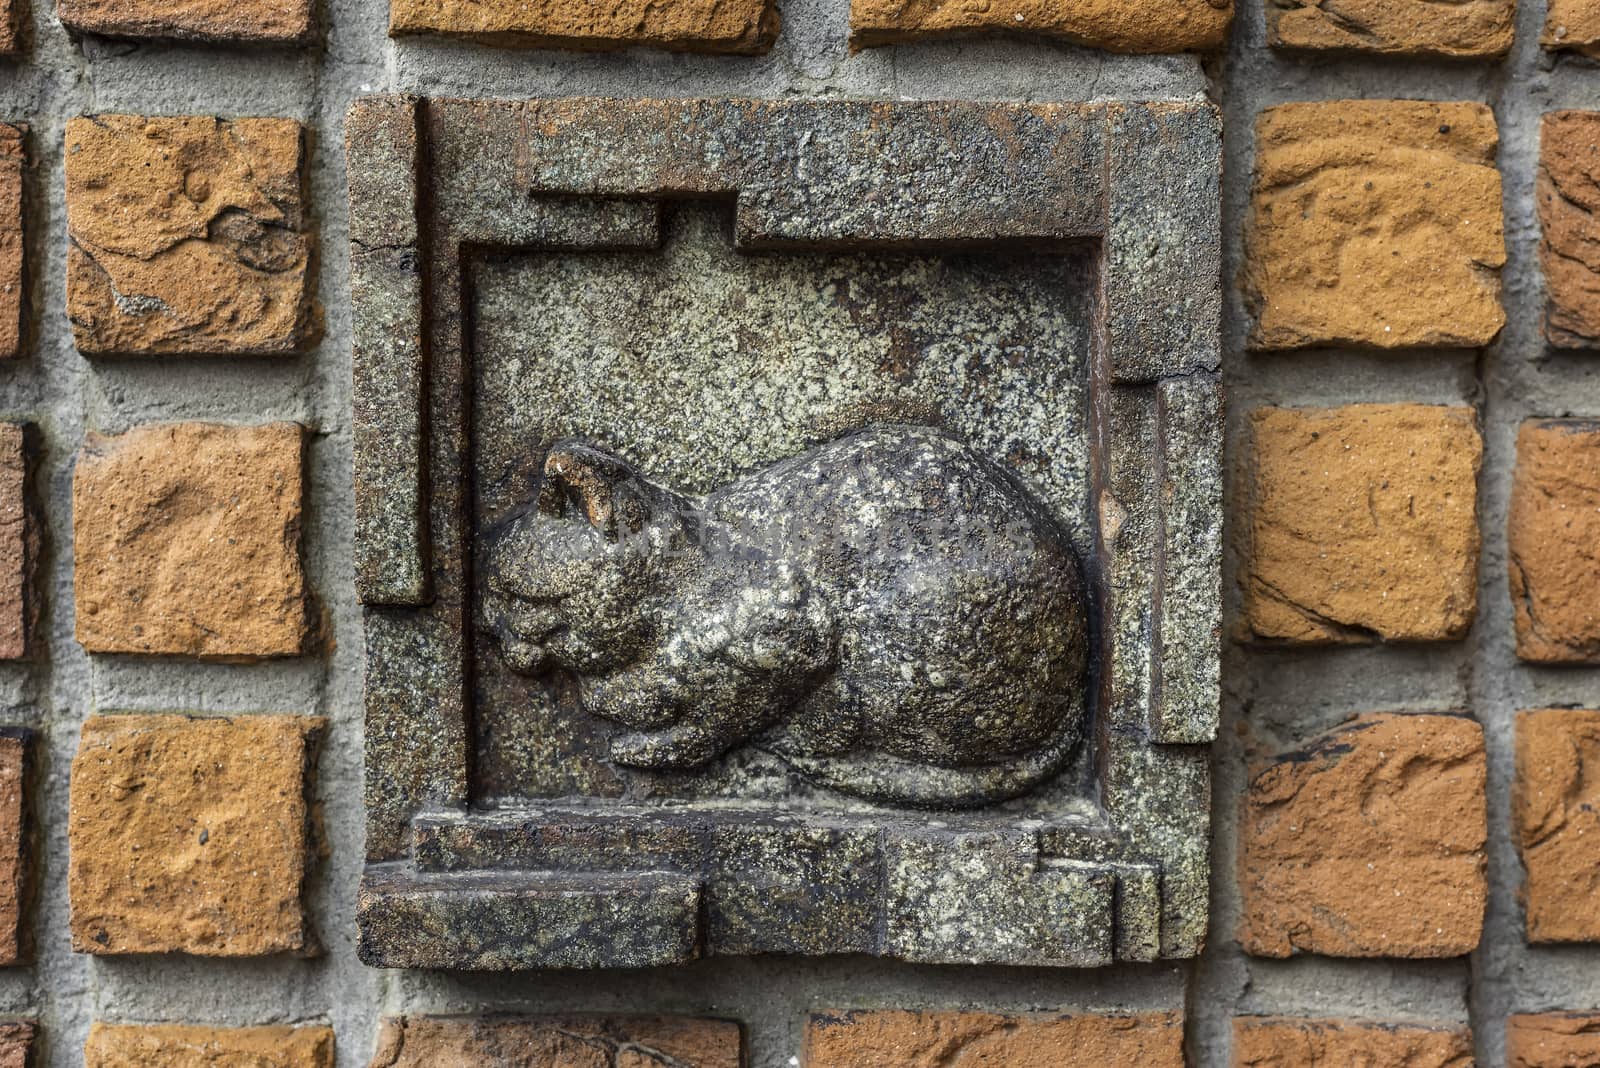 Bas reflief of a sleeping cat brown brick blended in a orage bricks wall